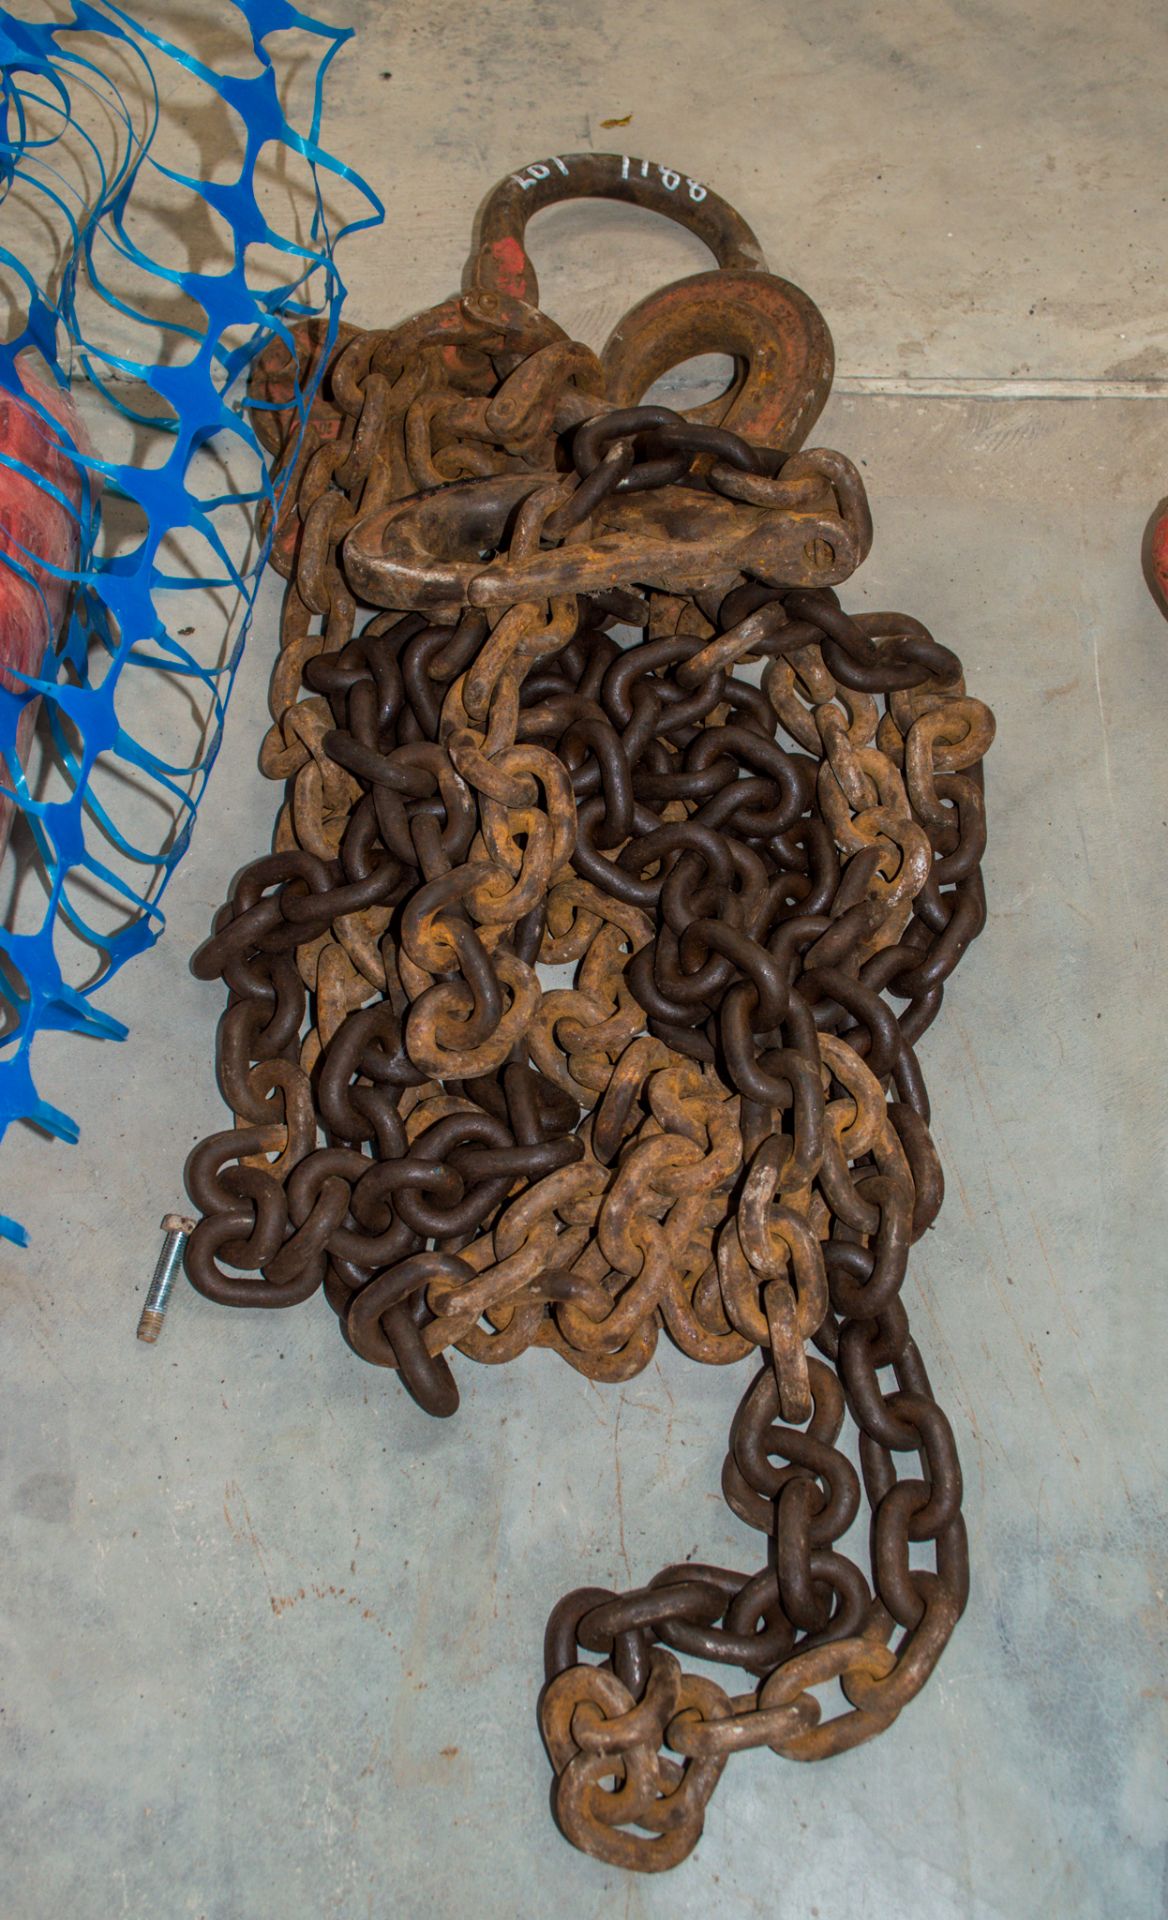 2 leg lifting chain